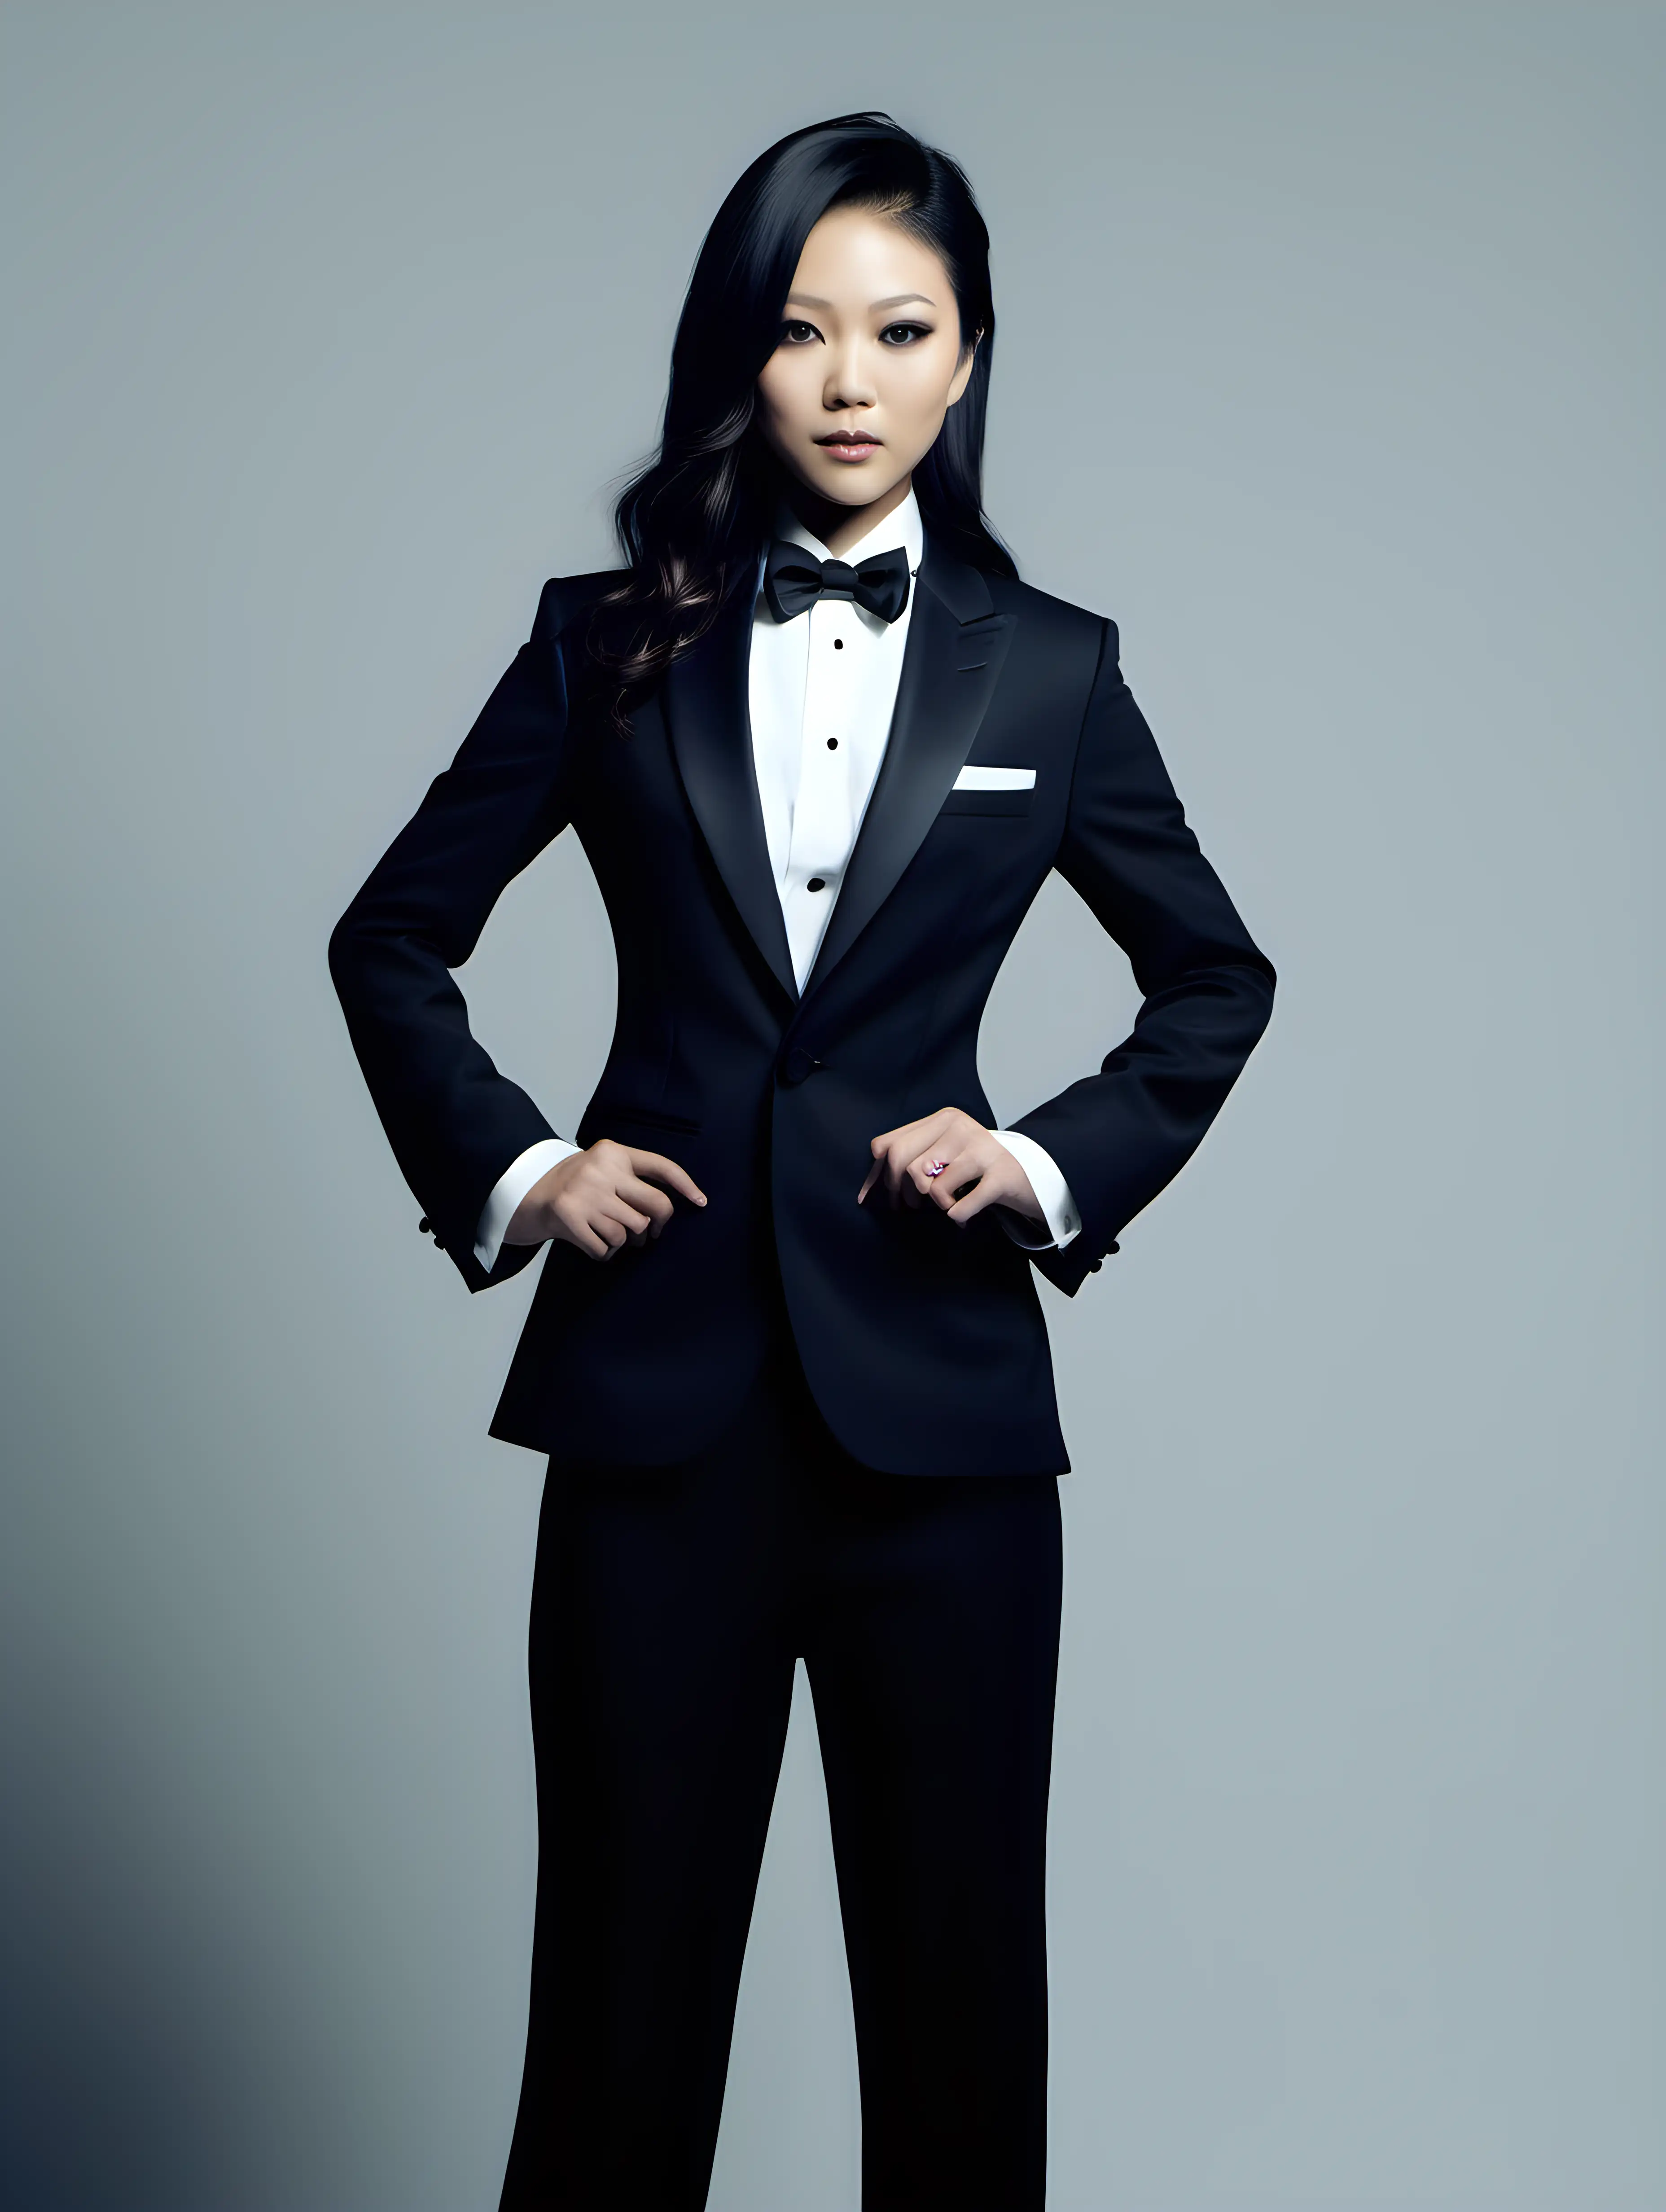 stephanie hsu wearing a tuxedo